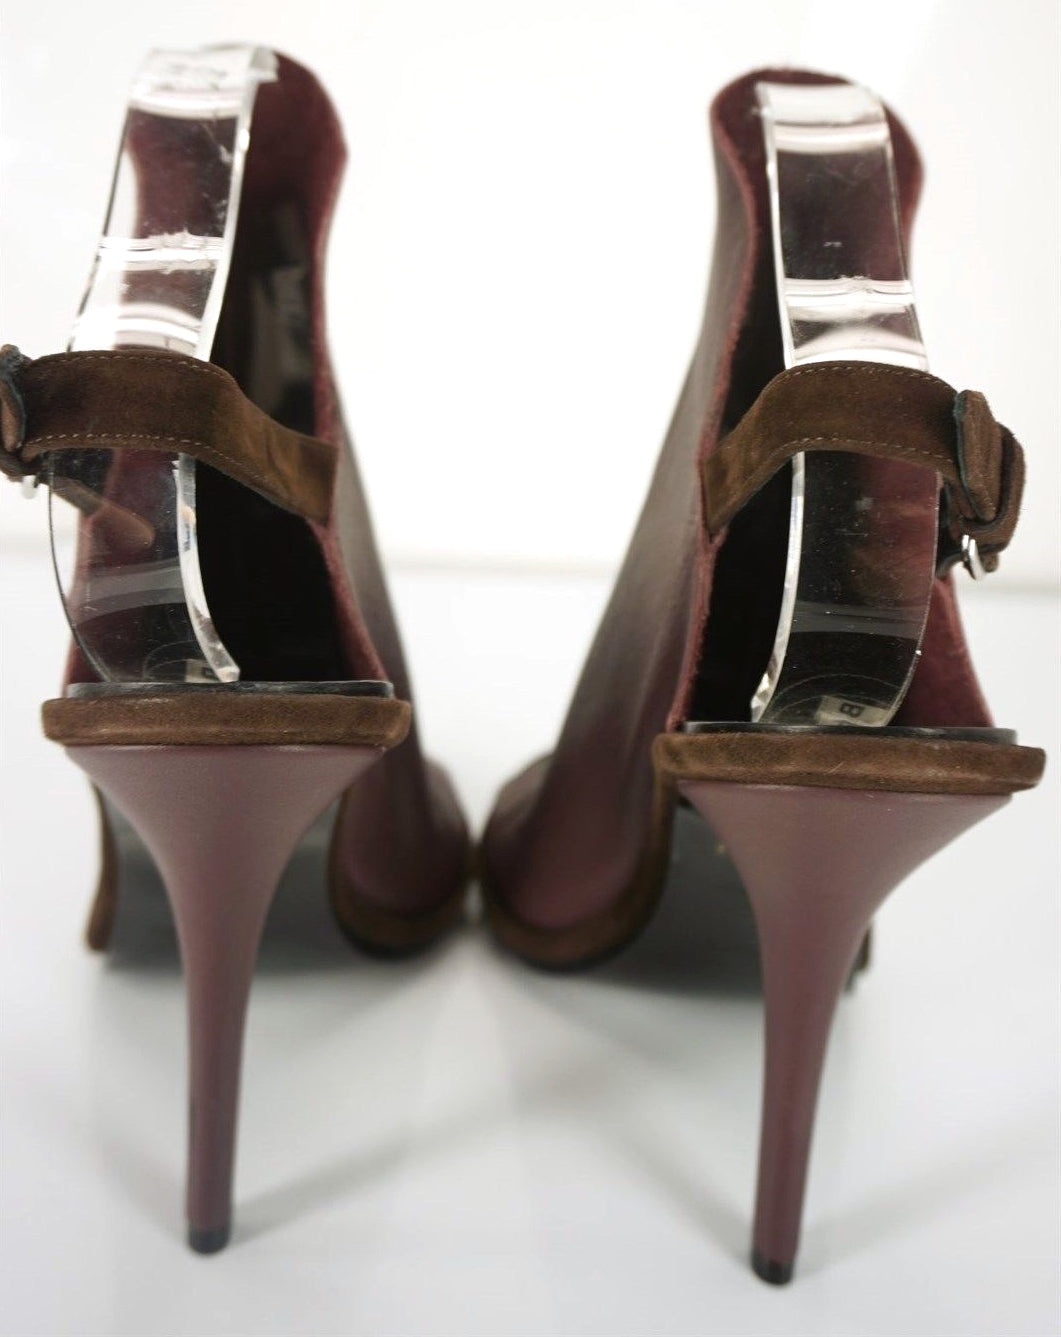 Balenciaga Burgundy Glove Slingback Open Toe Slide Sandals size 41 11 New $735